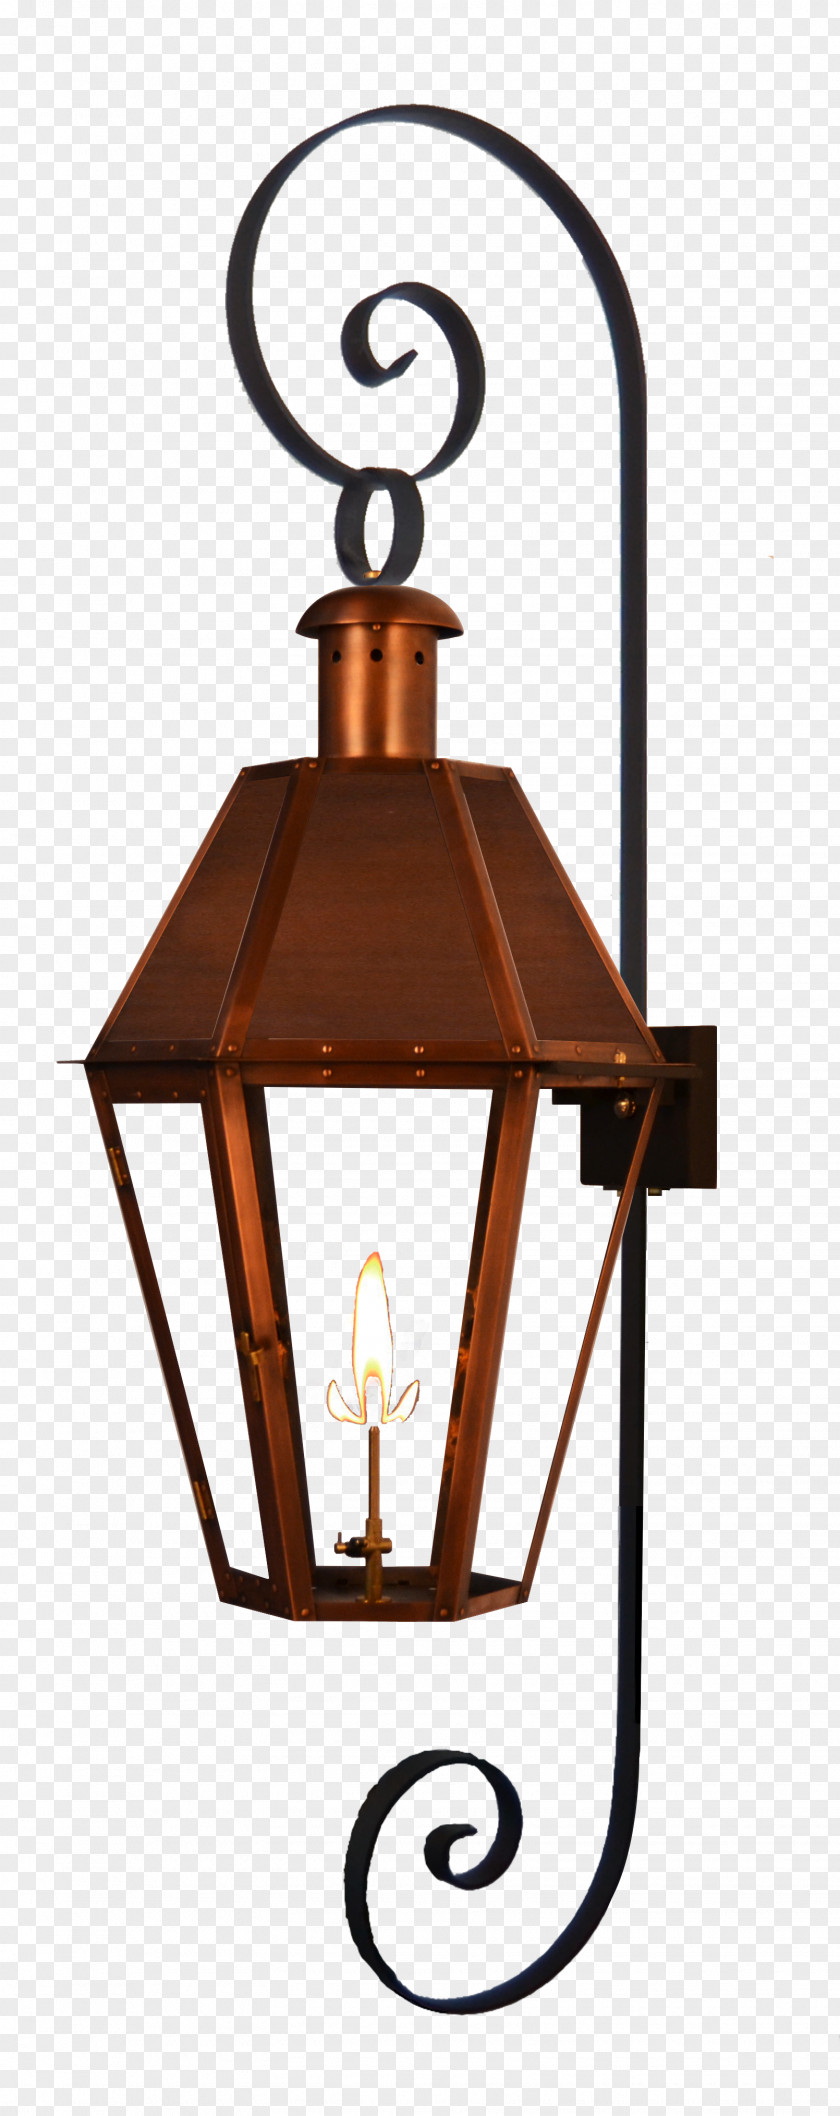 Kongming Latern Lantern Gas Lighting Landscape Light Fixture PNG